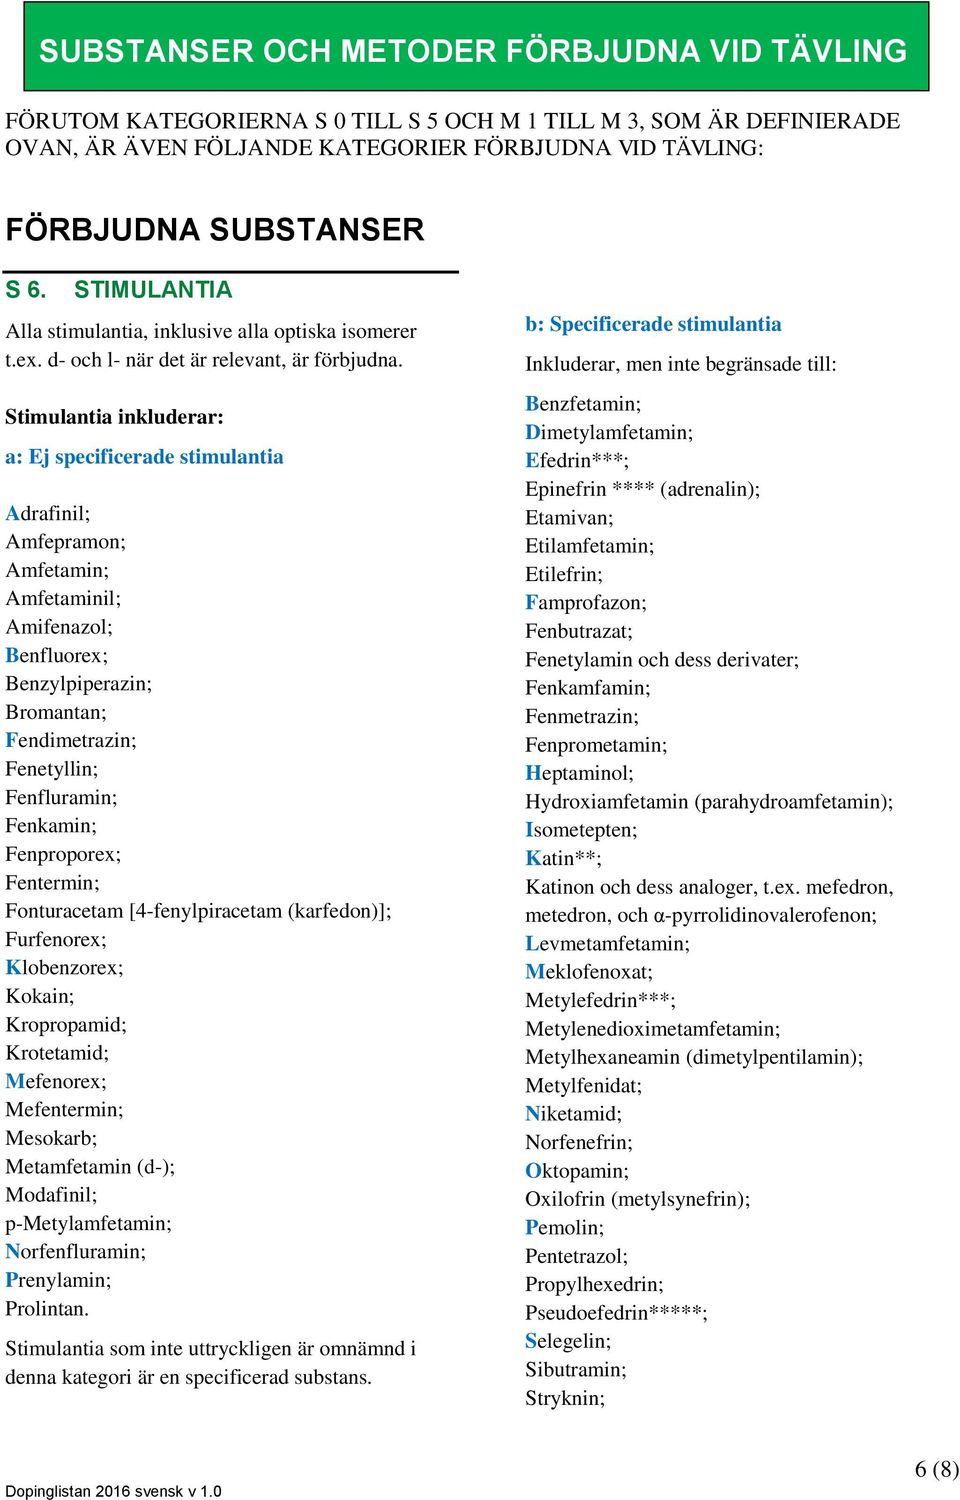 Stimulantia inkluderar: a: Ej specificerade stimulantia Adrafinil; Amfepramon; Amfetamin; Amfetaminil; Amifenazol; Benfluorex; Benzylpiperazin; Bromantan; Fendimetrazin; Fenetyllin; Fenfluramin;